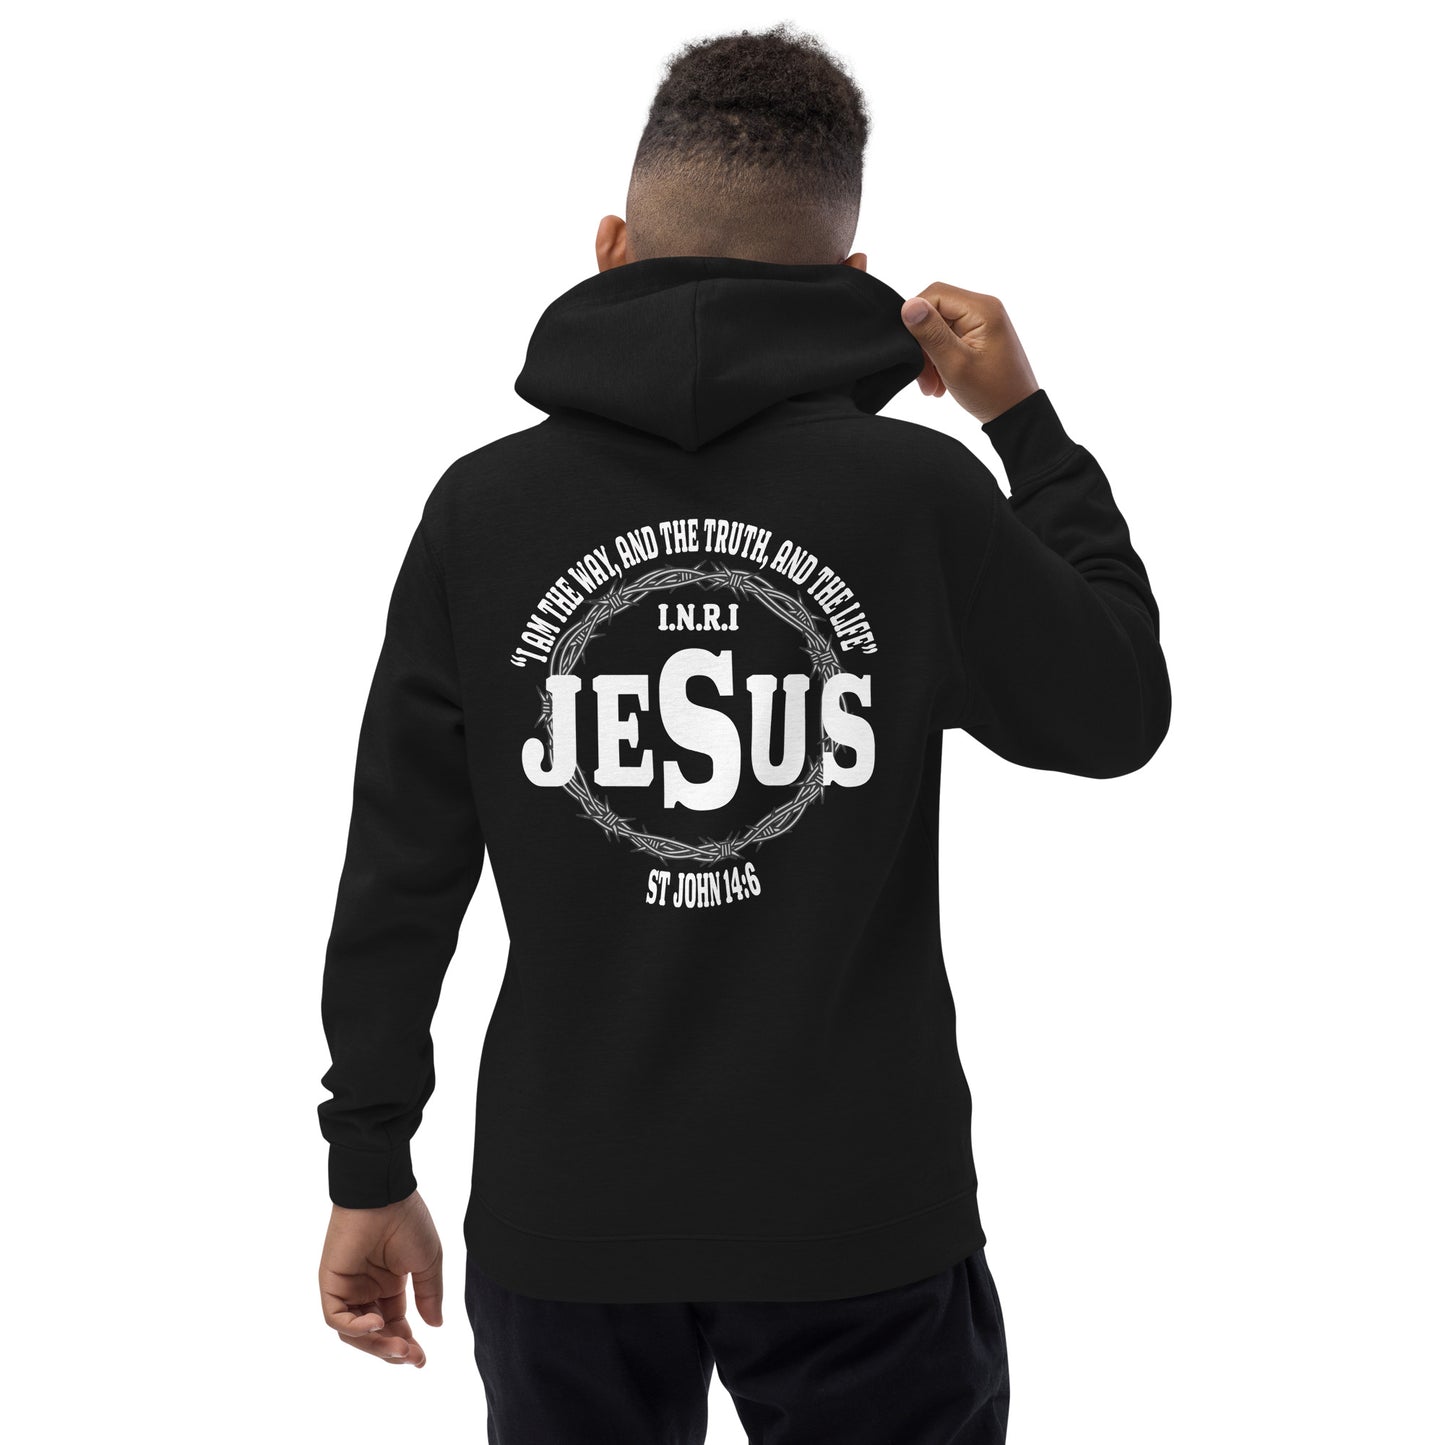 Jesus the Way, Truth and Light Children's Hoodie